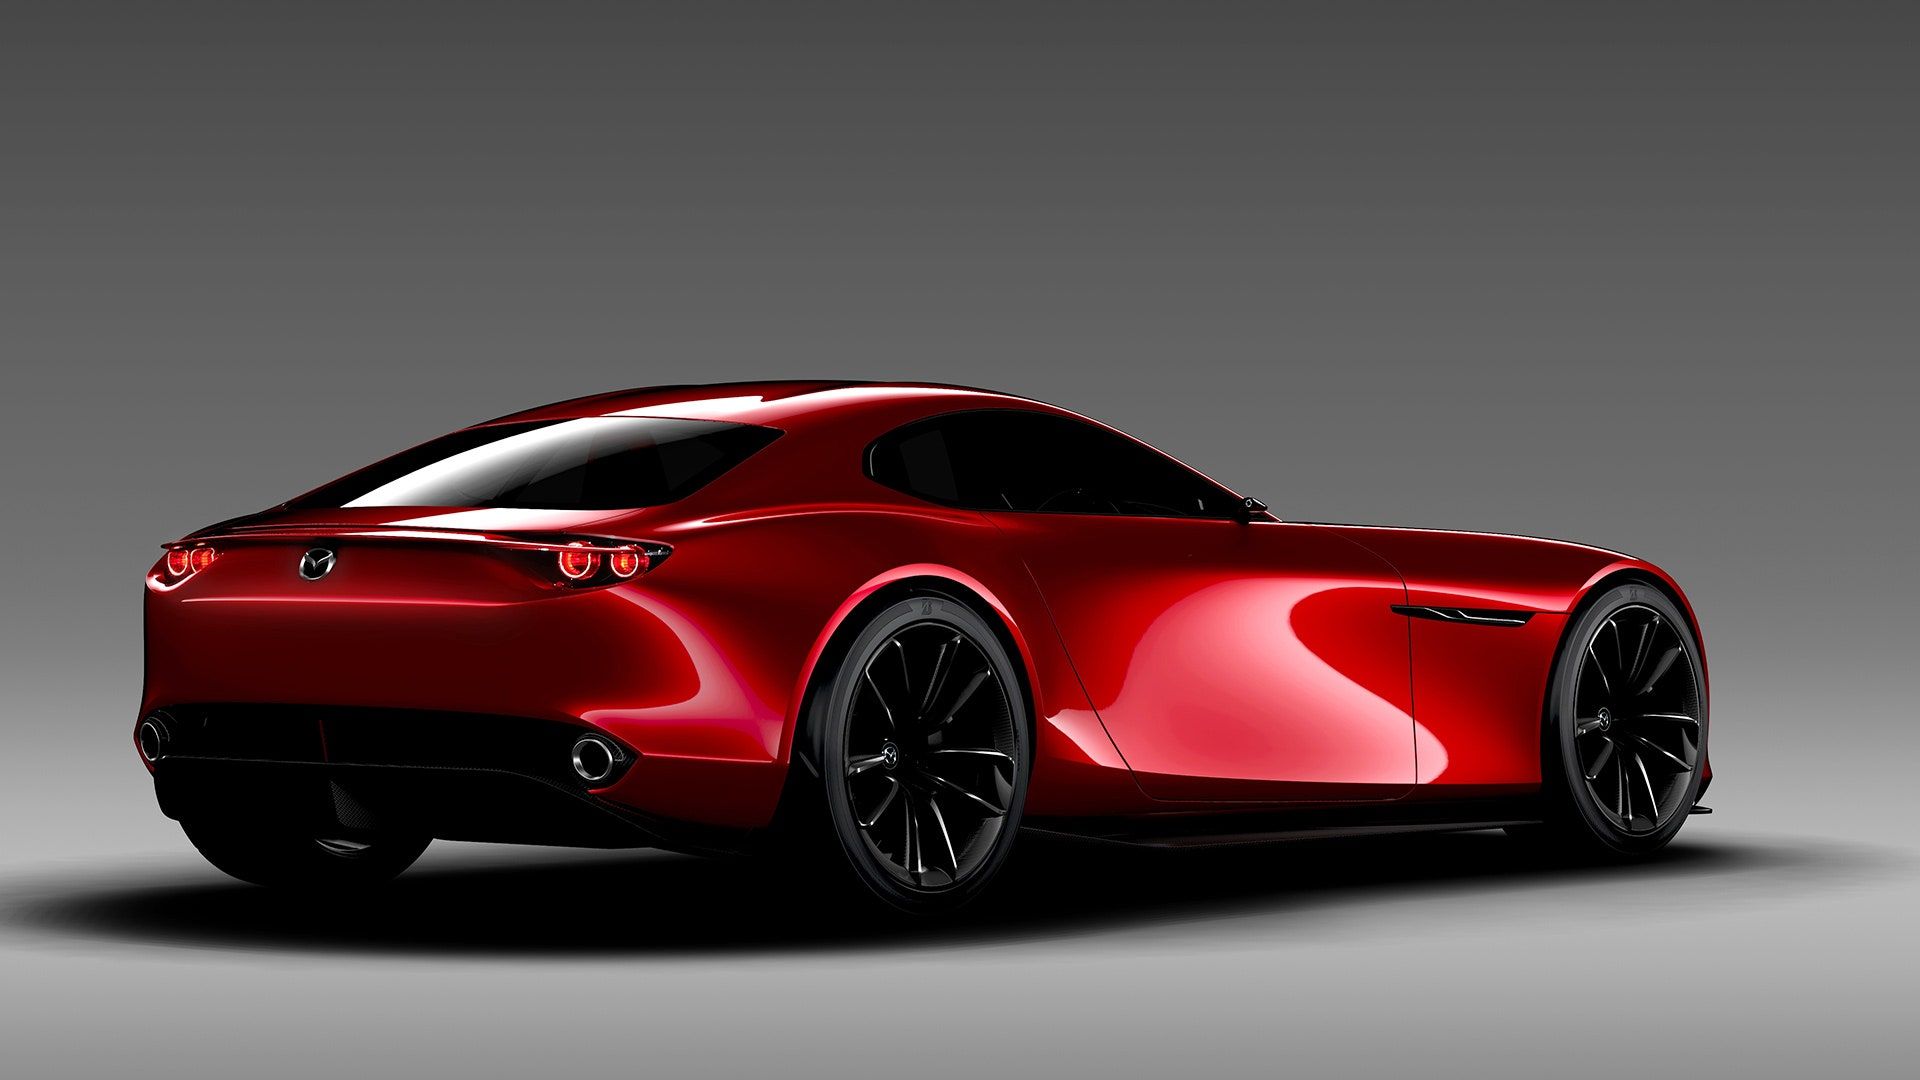 Mazda Rotary Engine Cars: The forgotten sports car.